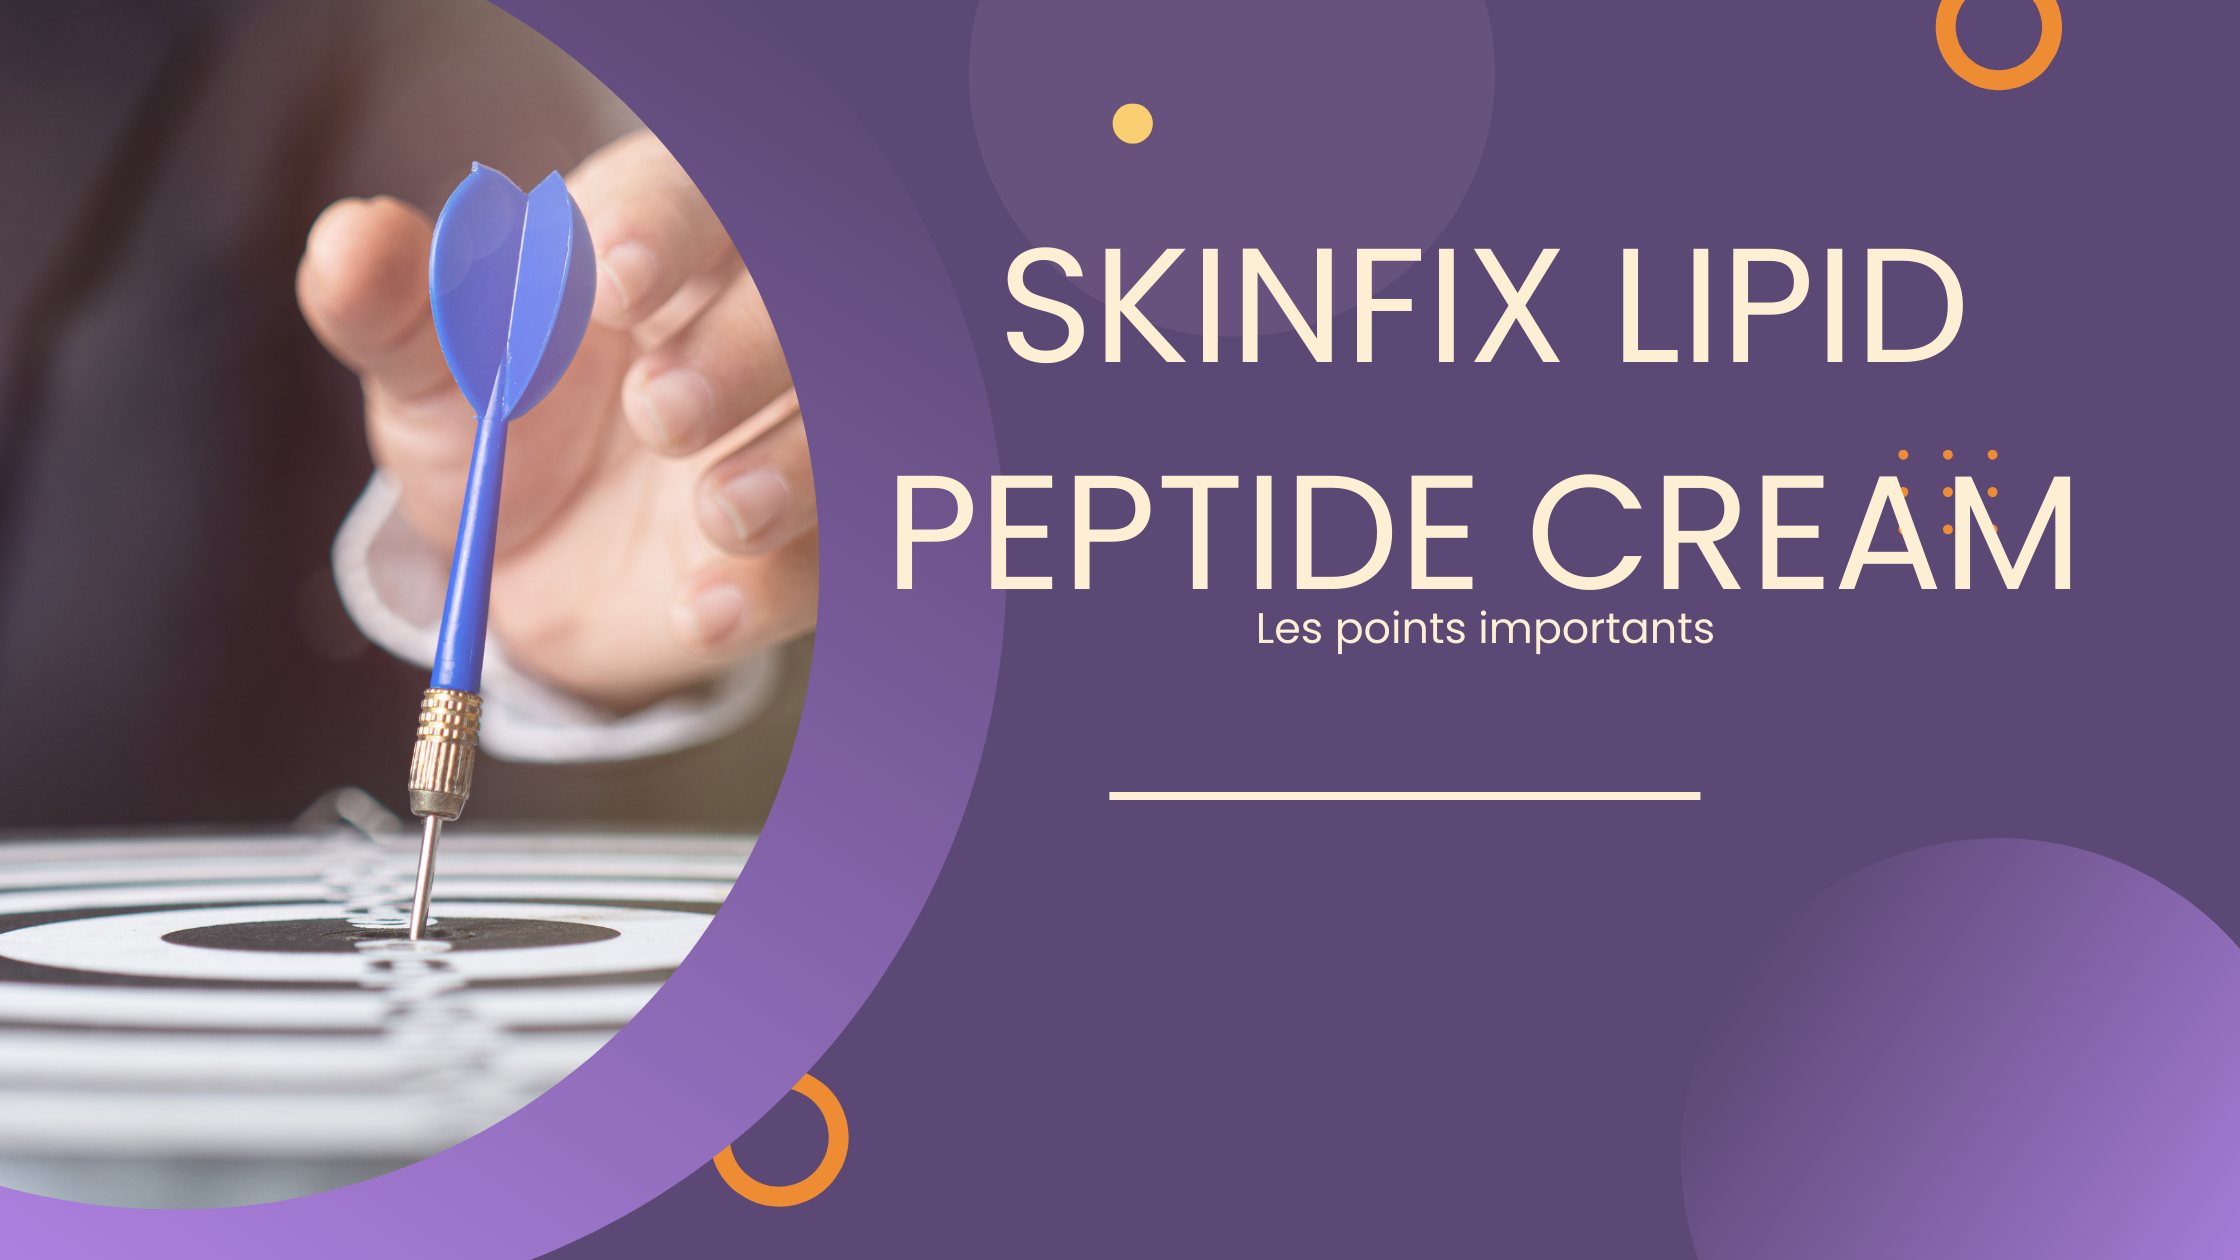 skinfix lipid peptide cream | Les points importants